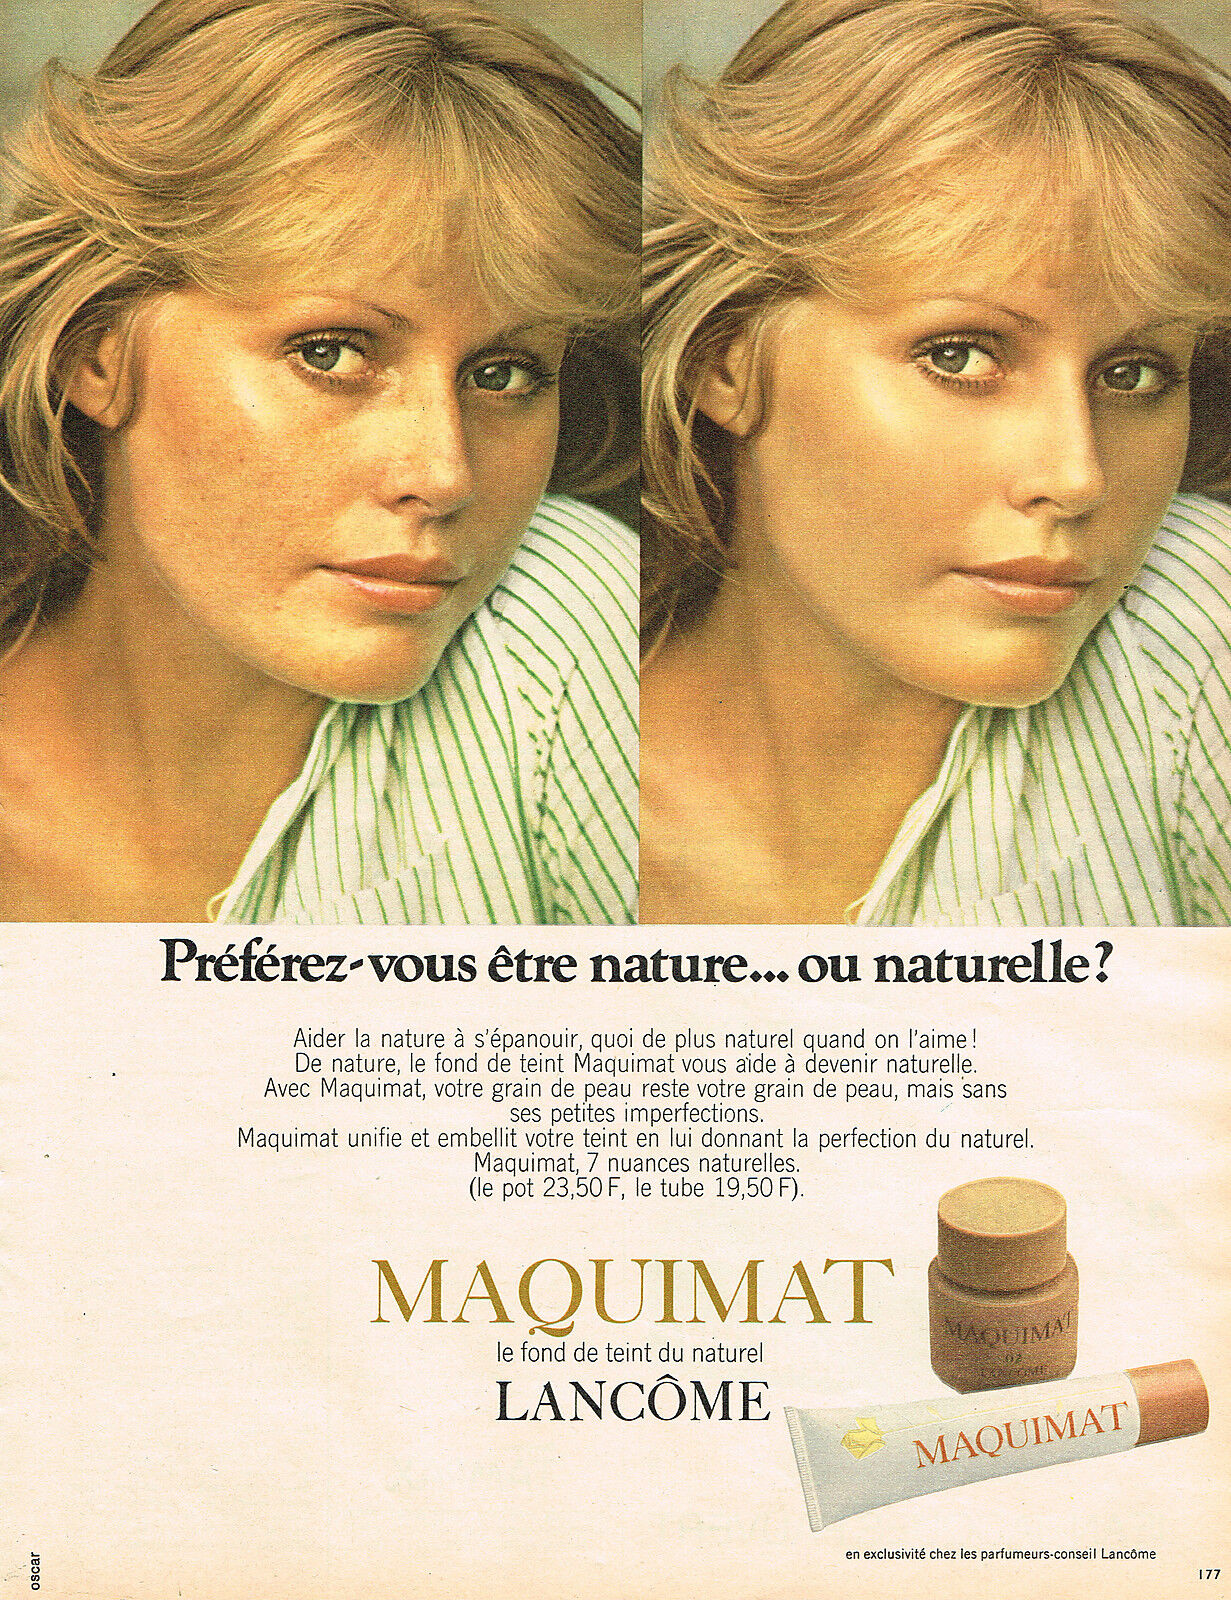 1973 LANCOME ADVERTISING ADVERTISEMENT MAQUIMAT cosmetics